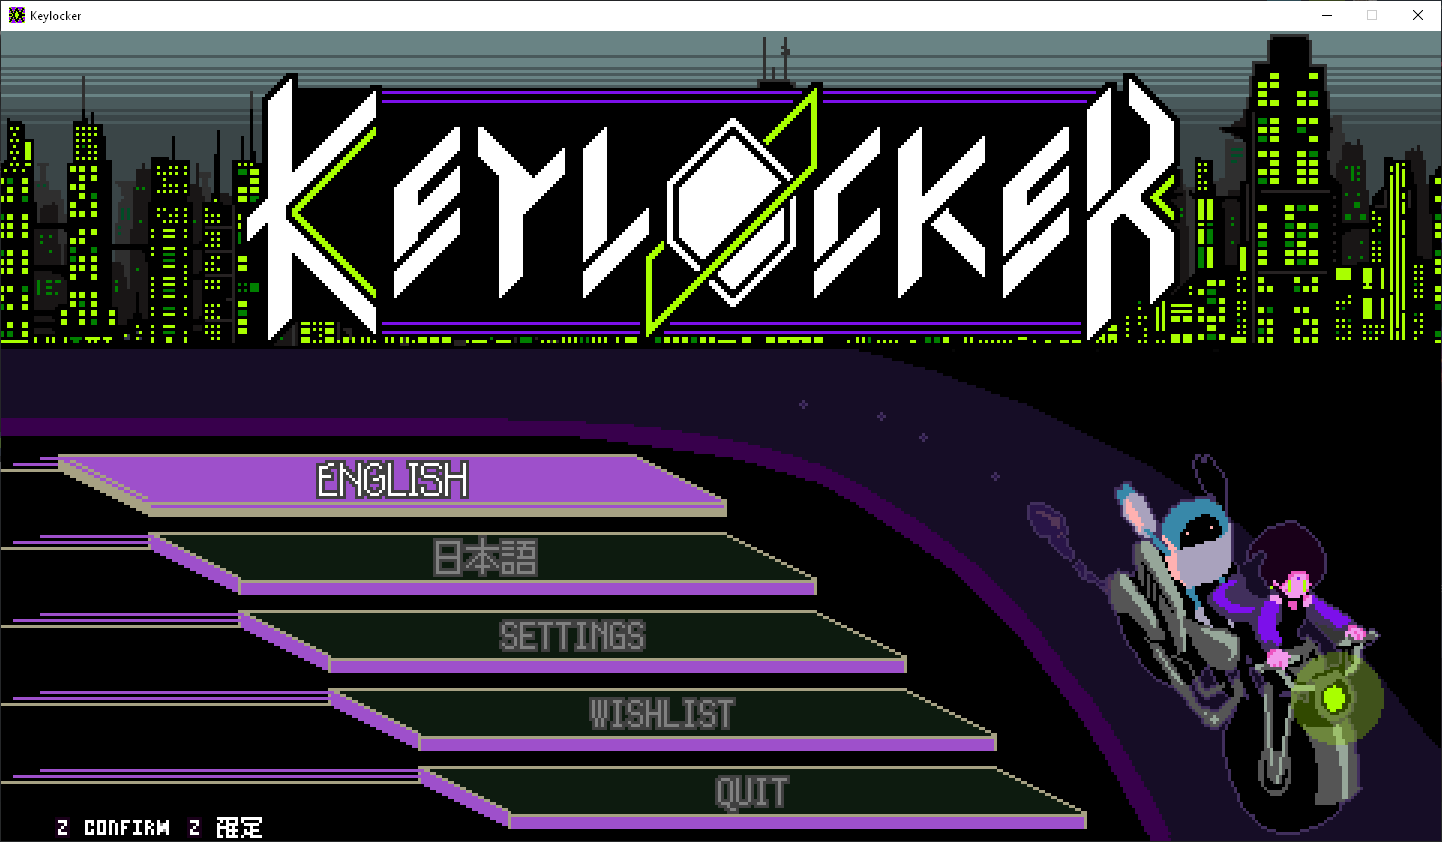 Keylocker demo title screen.